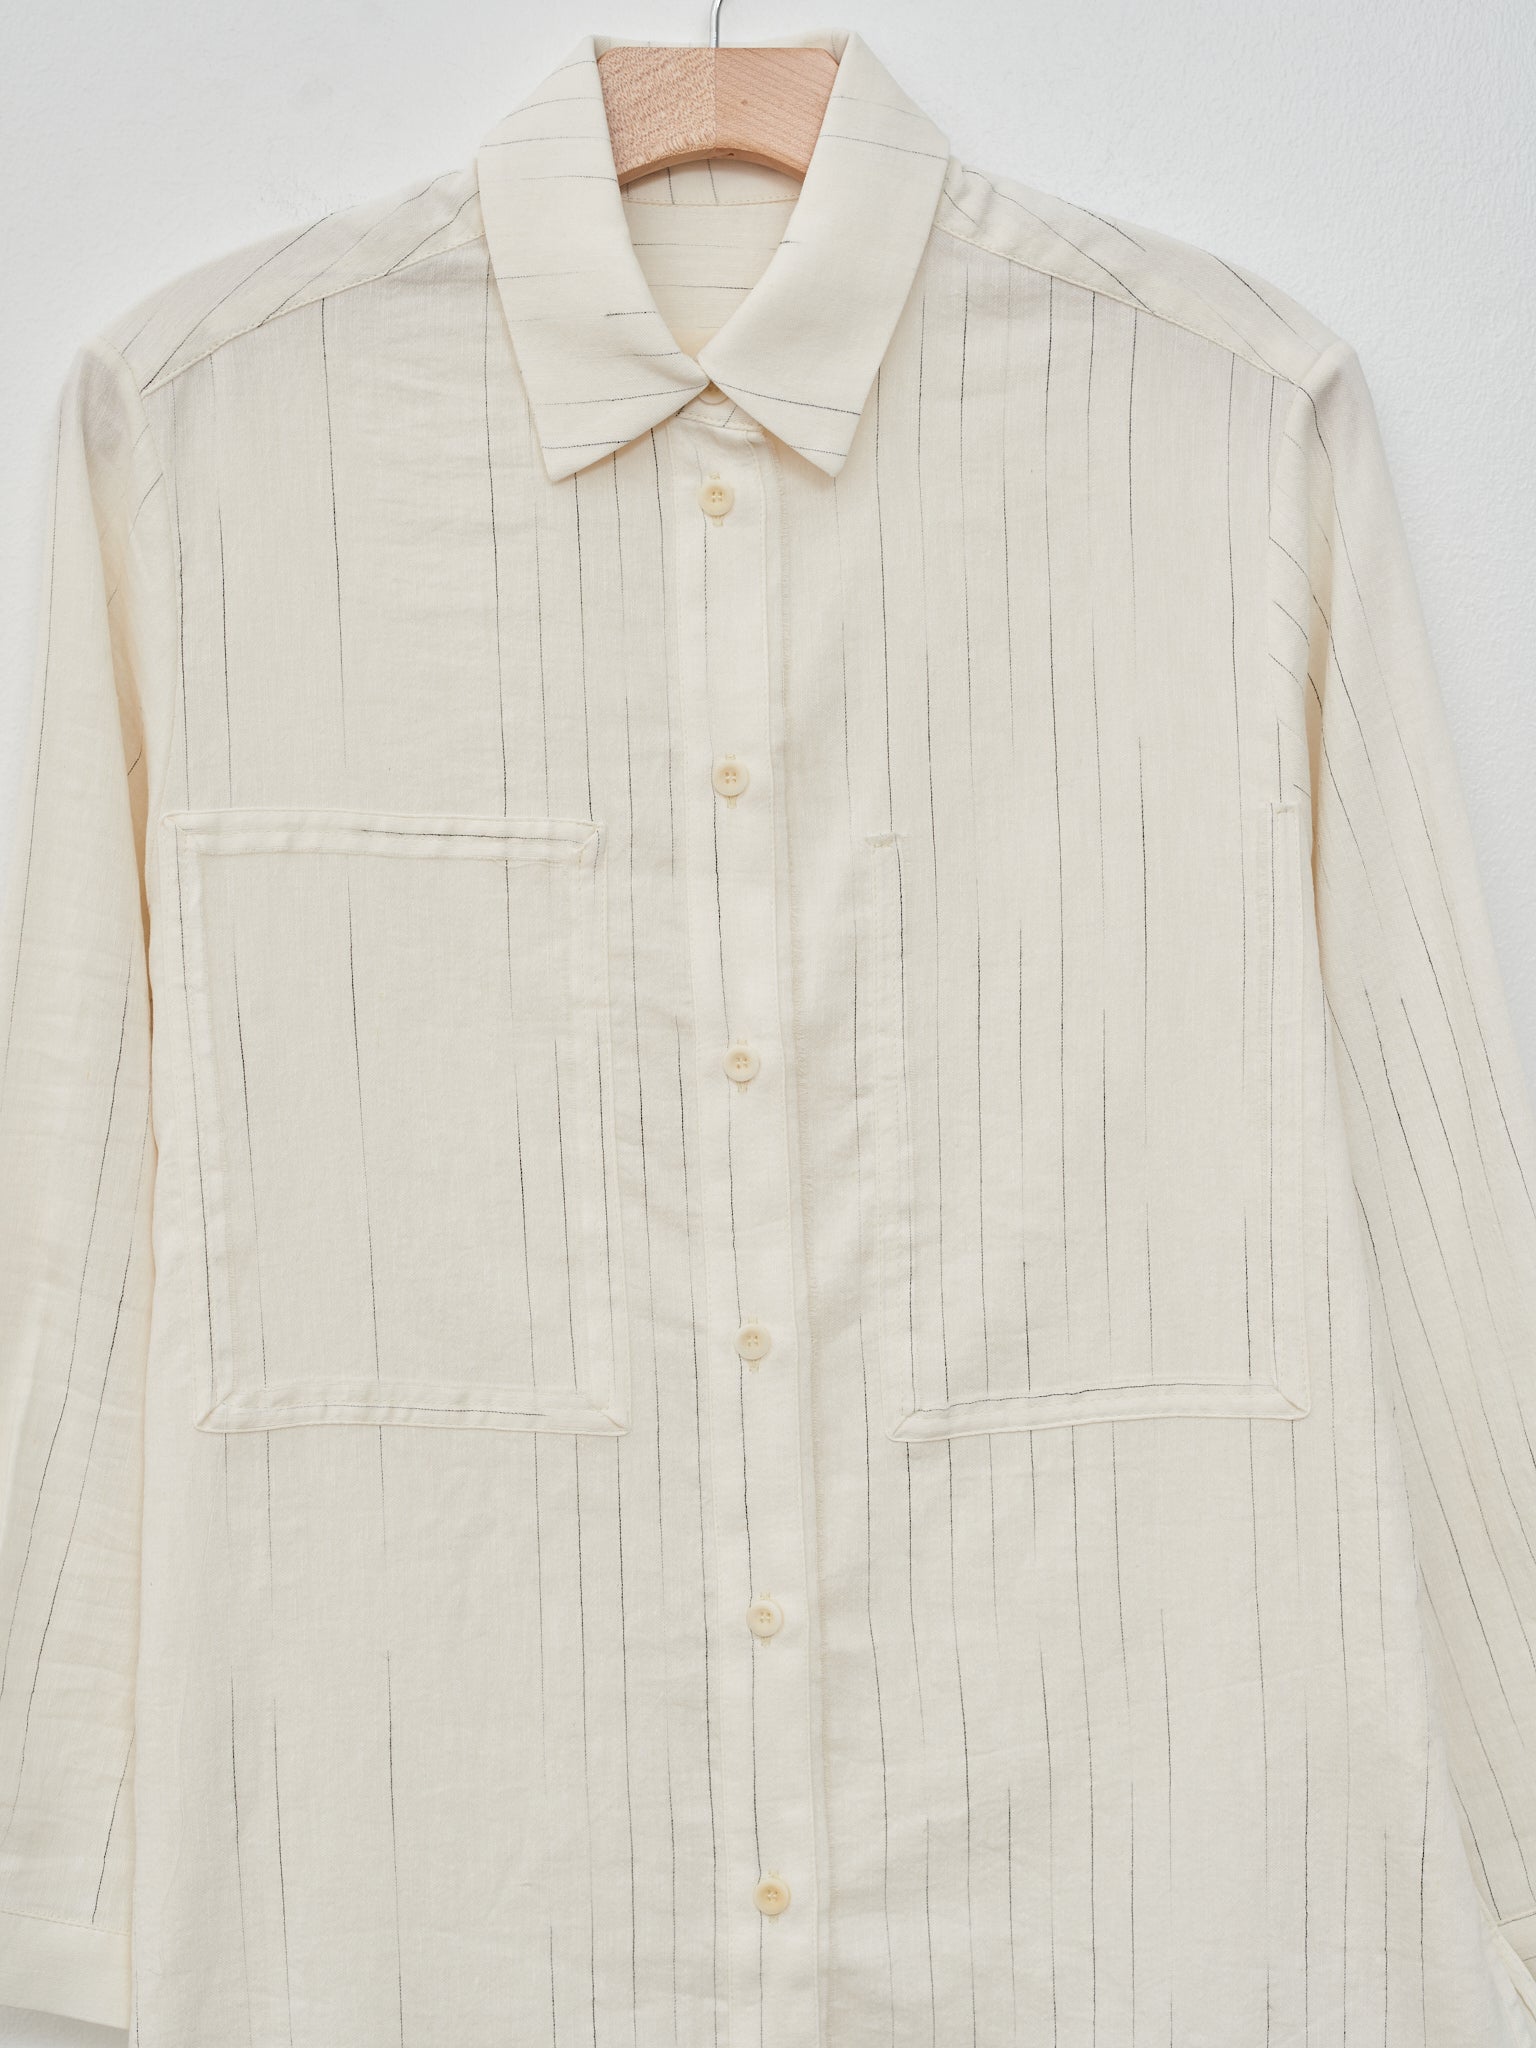 Namu Shop - Toogood The Tailor Shirt - Fading Stripe Raw/Lead